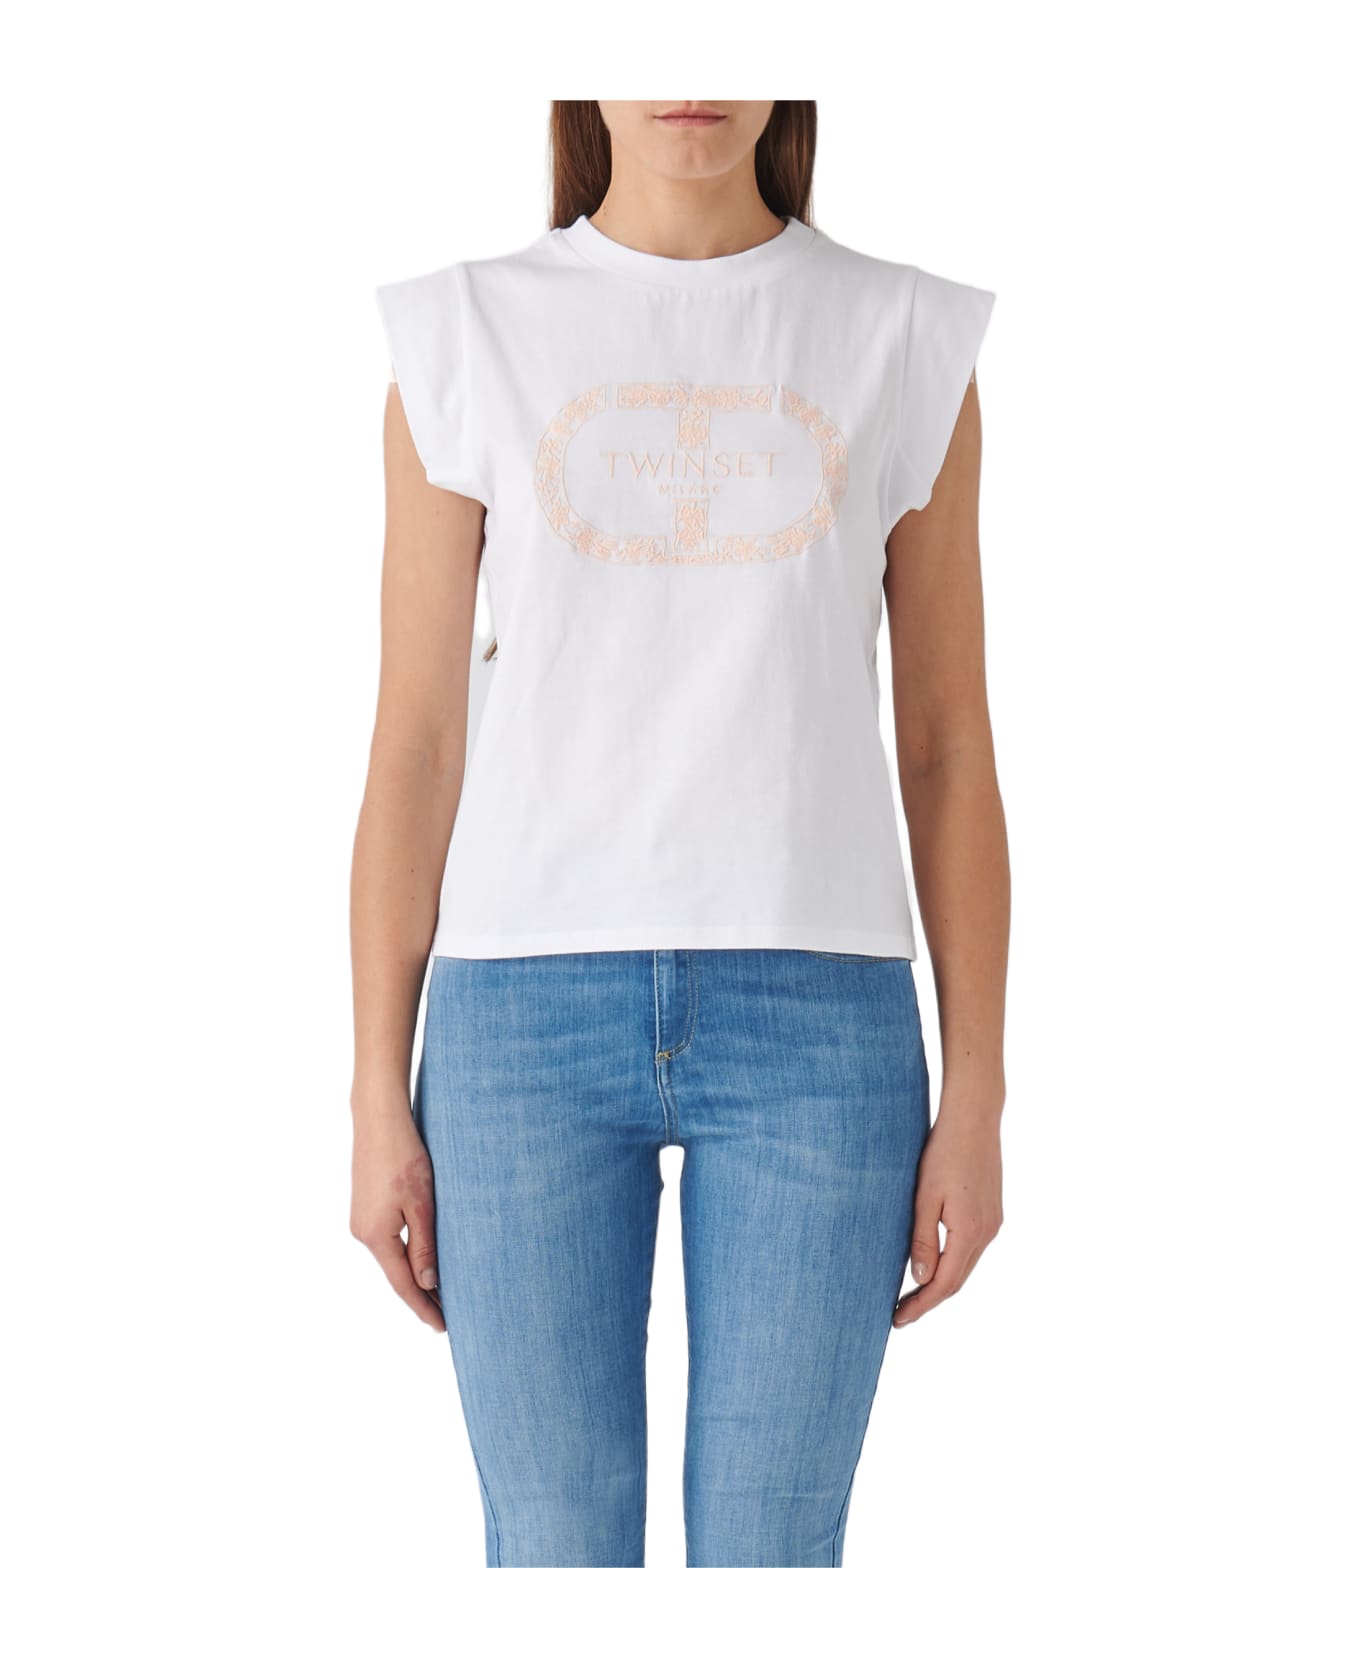 TwinSet Cotton T-shirt - BIANCO-ROSA 